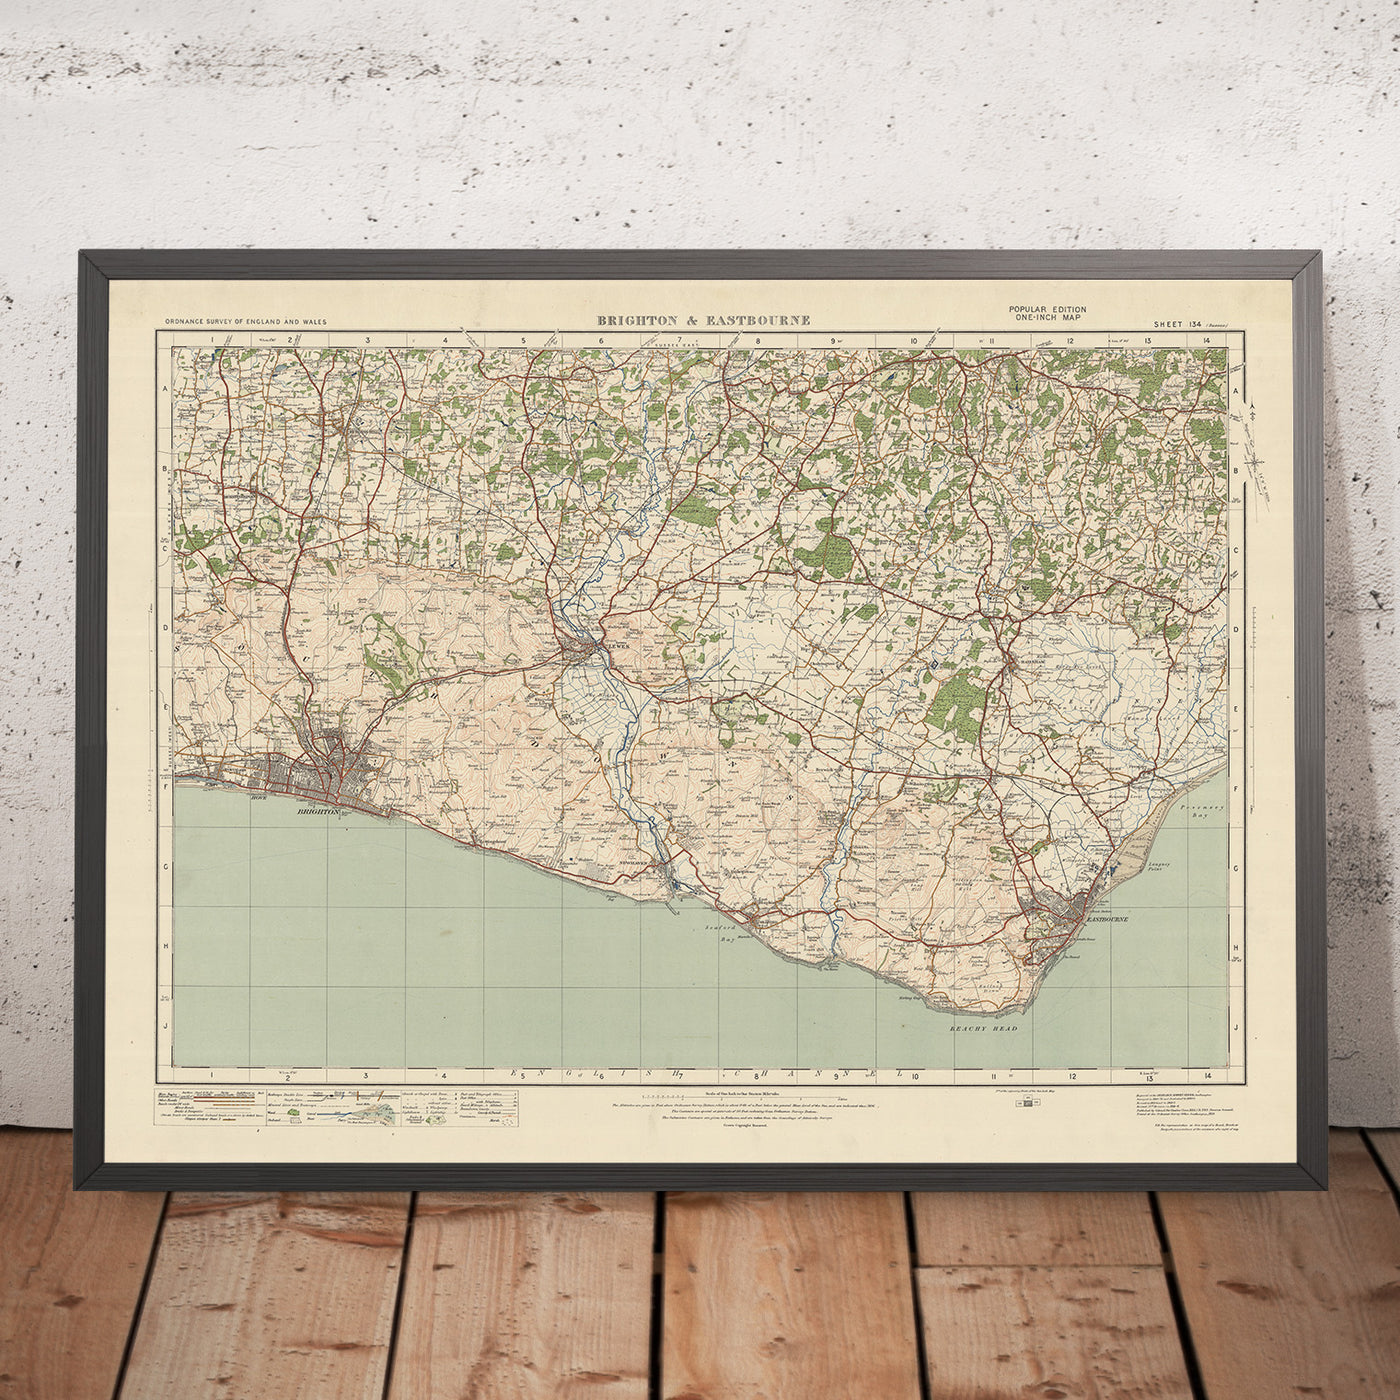 Old Ordnance Survey Map, Sheet 134 - Brighton & Eastbourne, 1925: Lewes, Newhaven, Burgess Hill, Hassocks, Hailsham